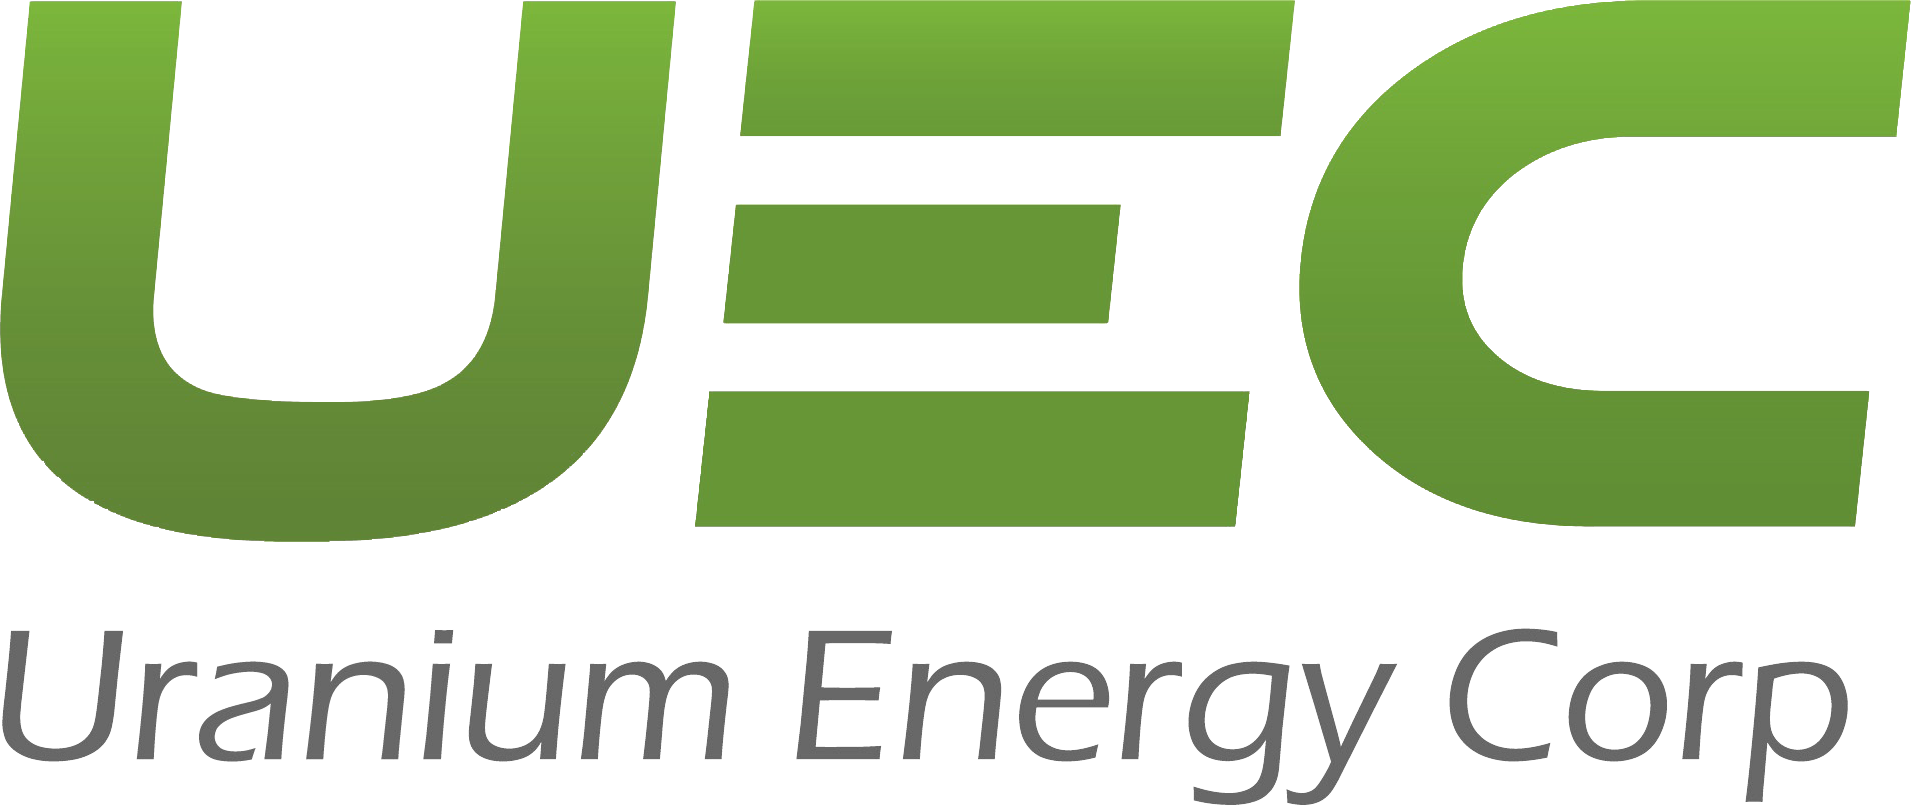 UEC Logo